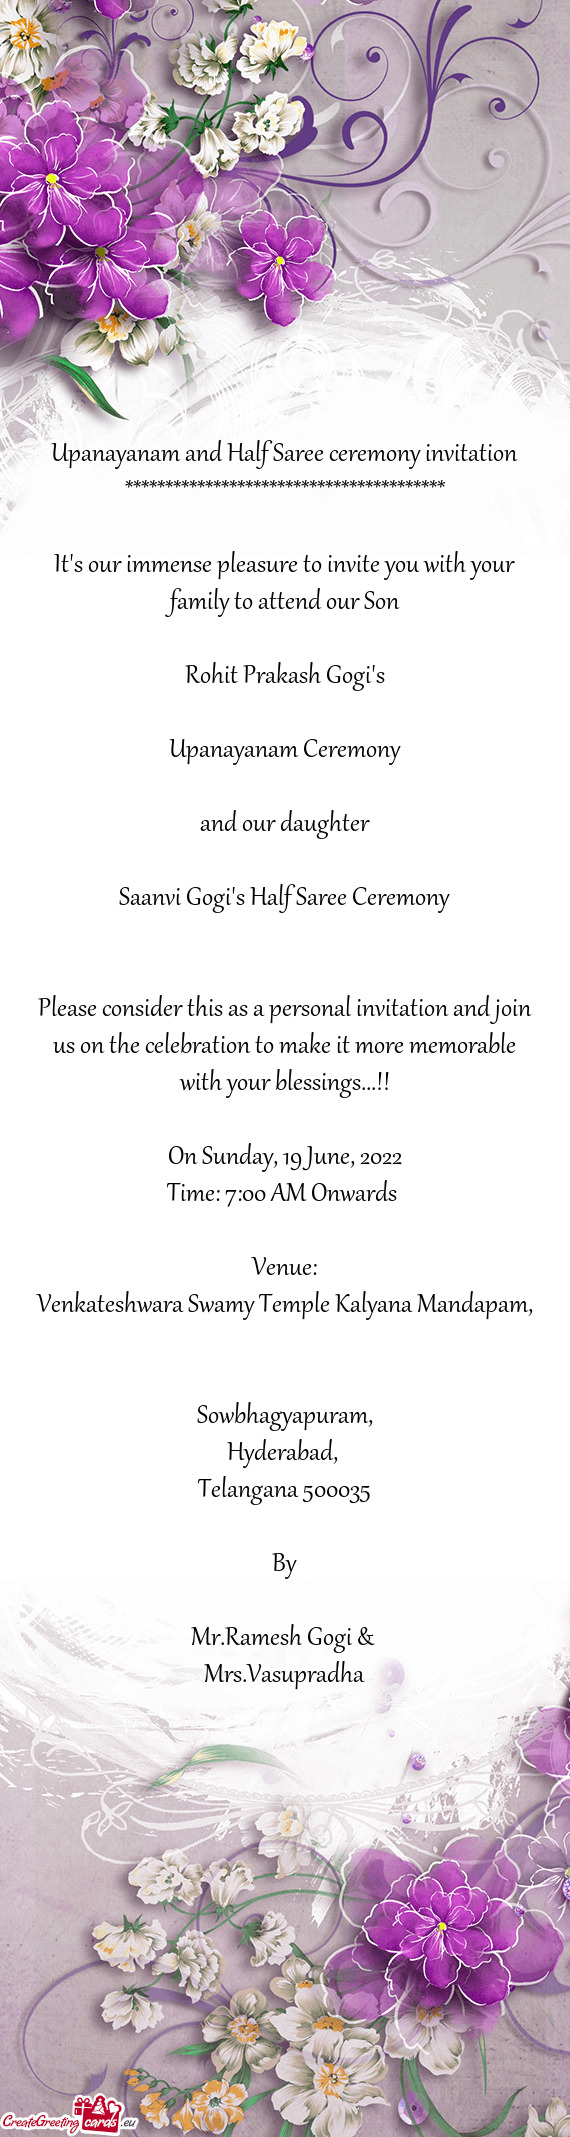 Upanayanam and Half Saree ceremony invitation - Free cards